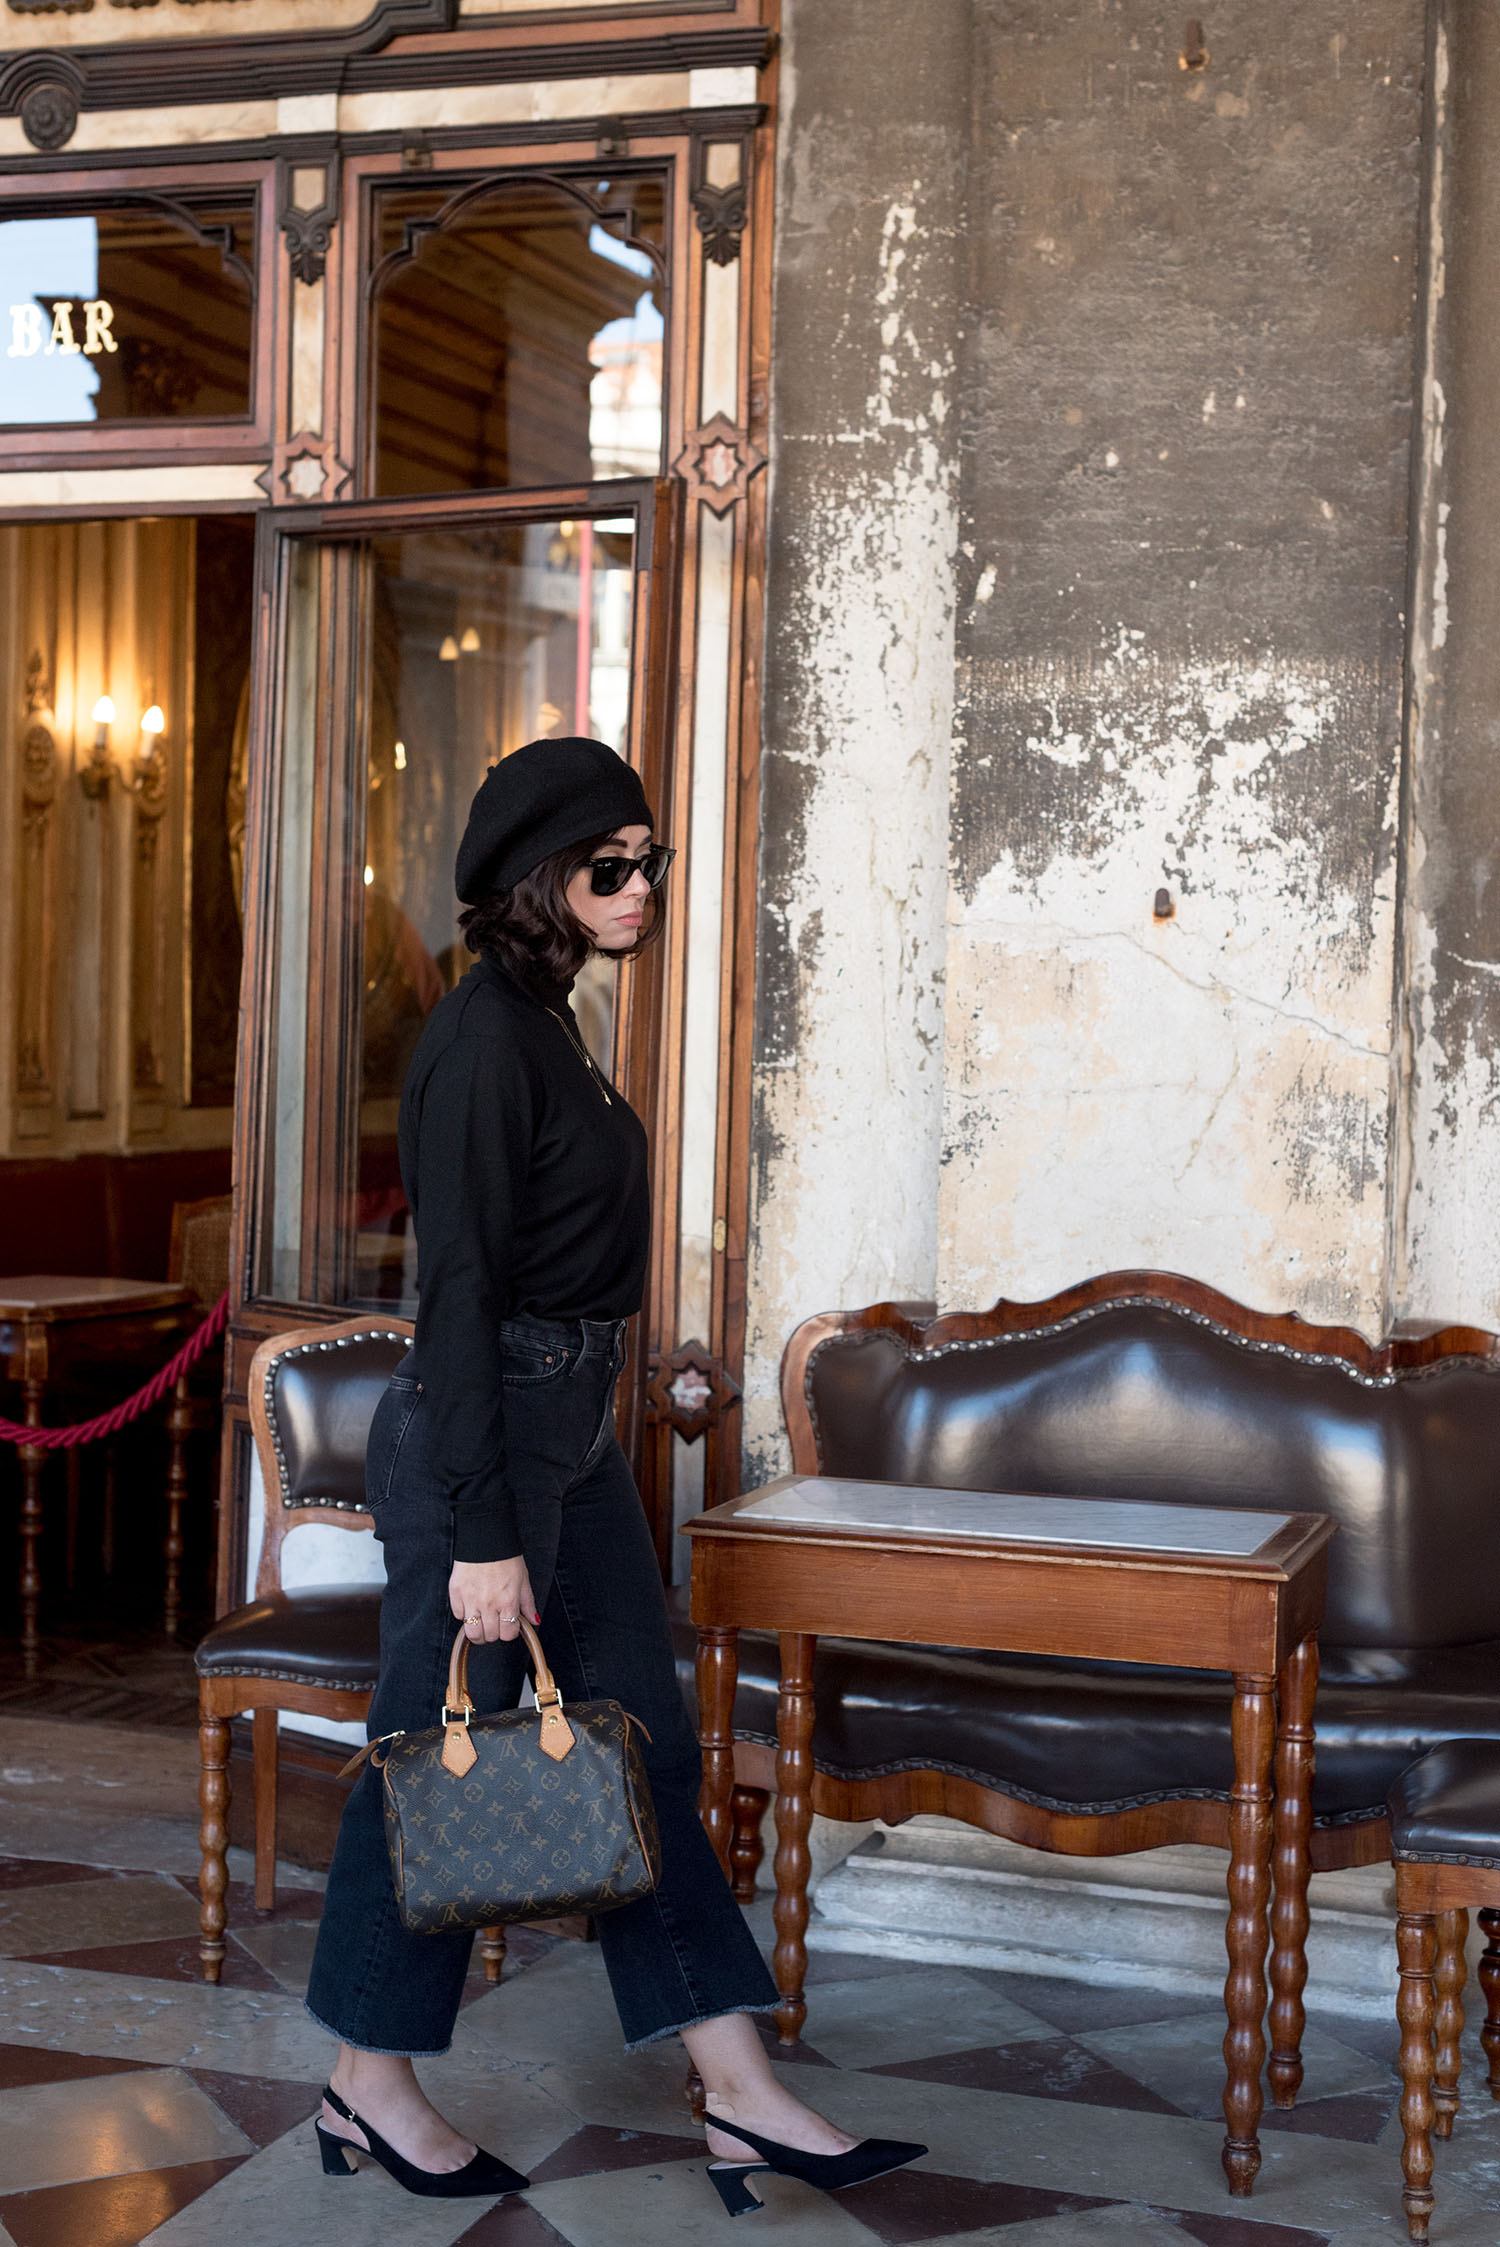 Top Canadian fashion blogger Cee Fardoe of Coco & Vera walks in Venice, Italy, wearing Mango kitten heels and carrying a Louis Vuitton Speedy 25 handbag